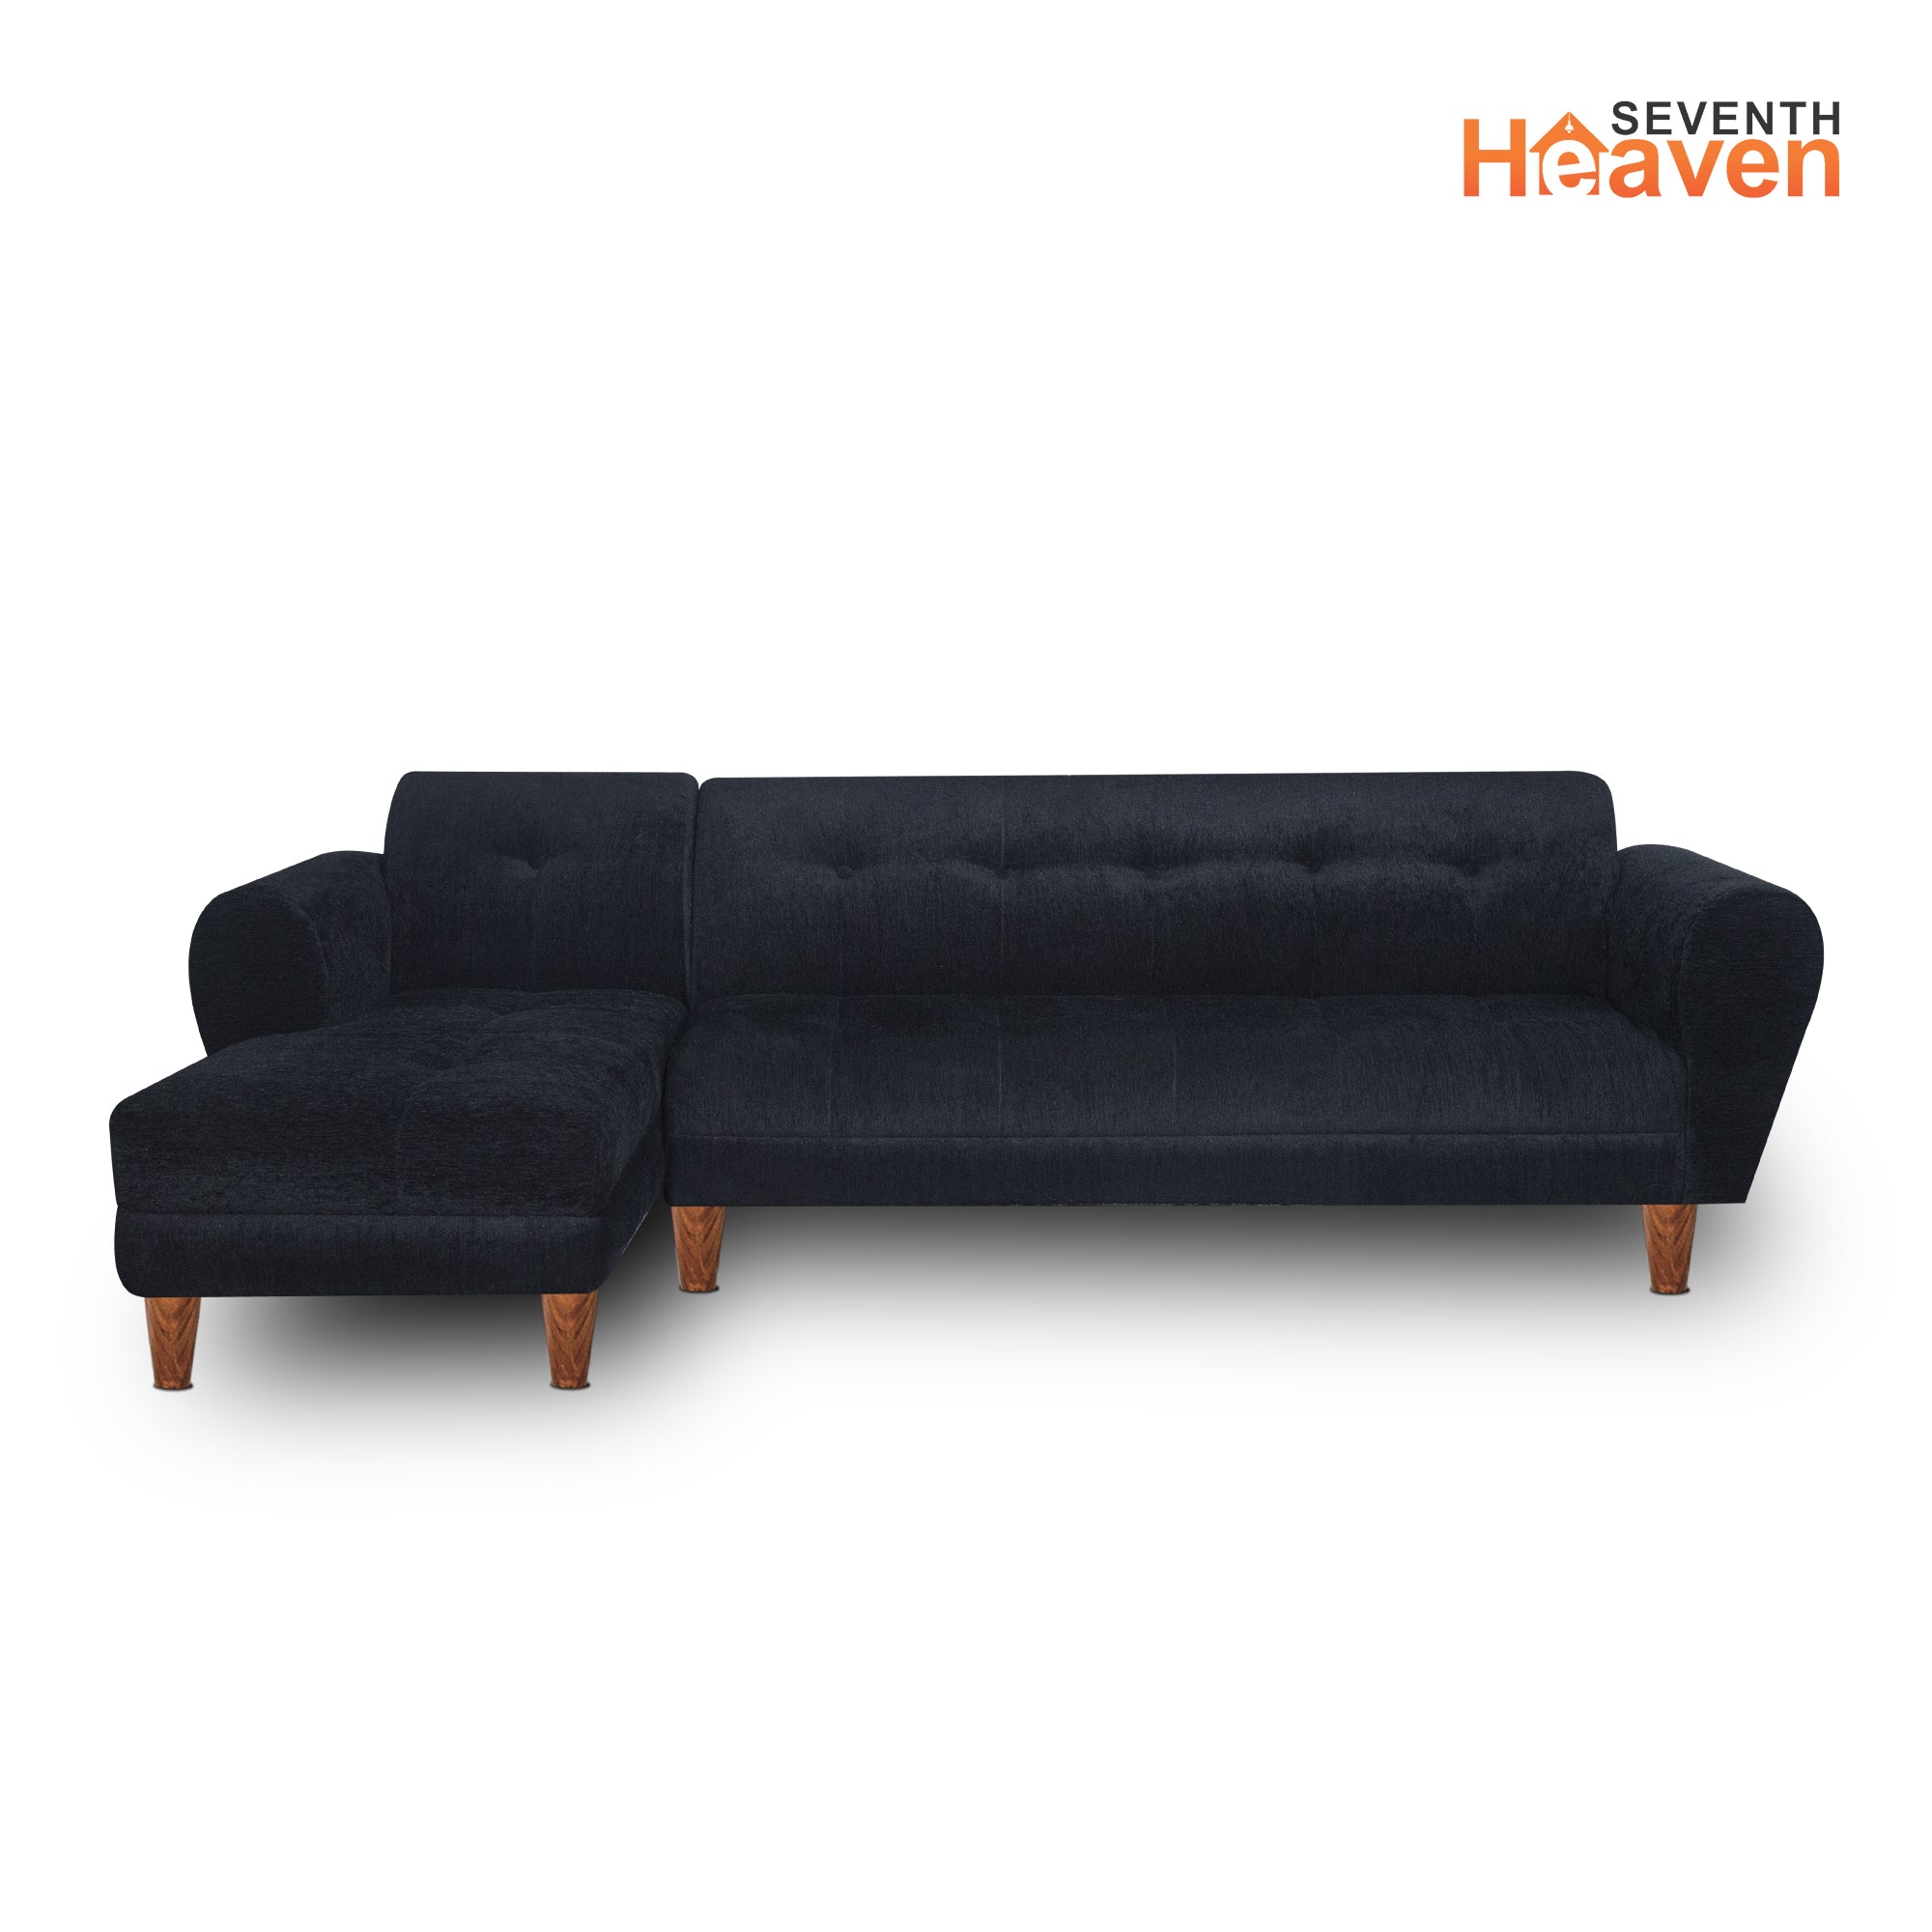 Seventh Heaven Milan 6 Seater Sofa, Extra Spacious, Chenille Molfino Fabric: 3 Year Warranty Fabric 6 Seater Sofa  (Finish Color - Black, DIY(Do-It-Yourself))